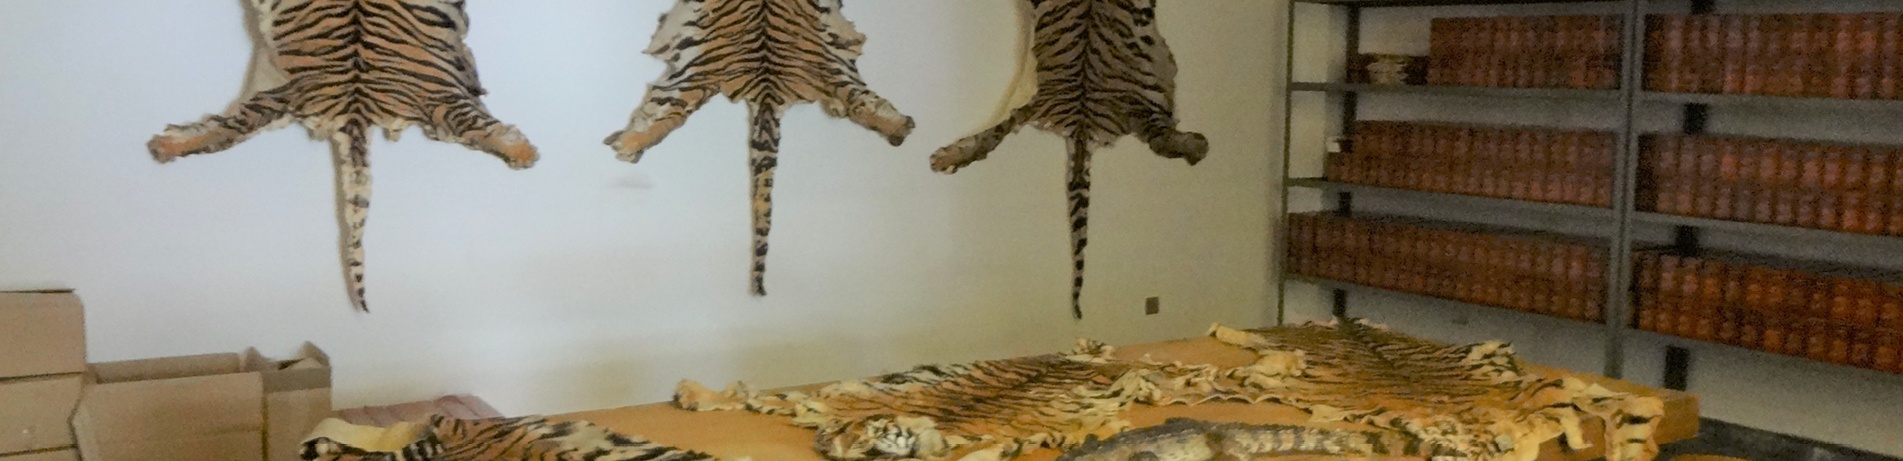 Tiger skins on display